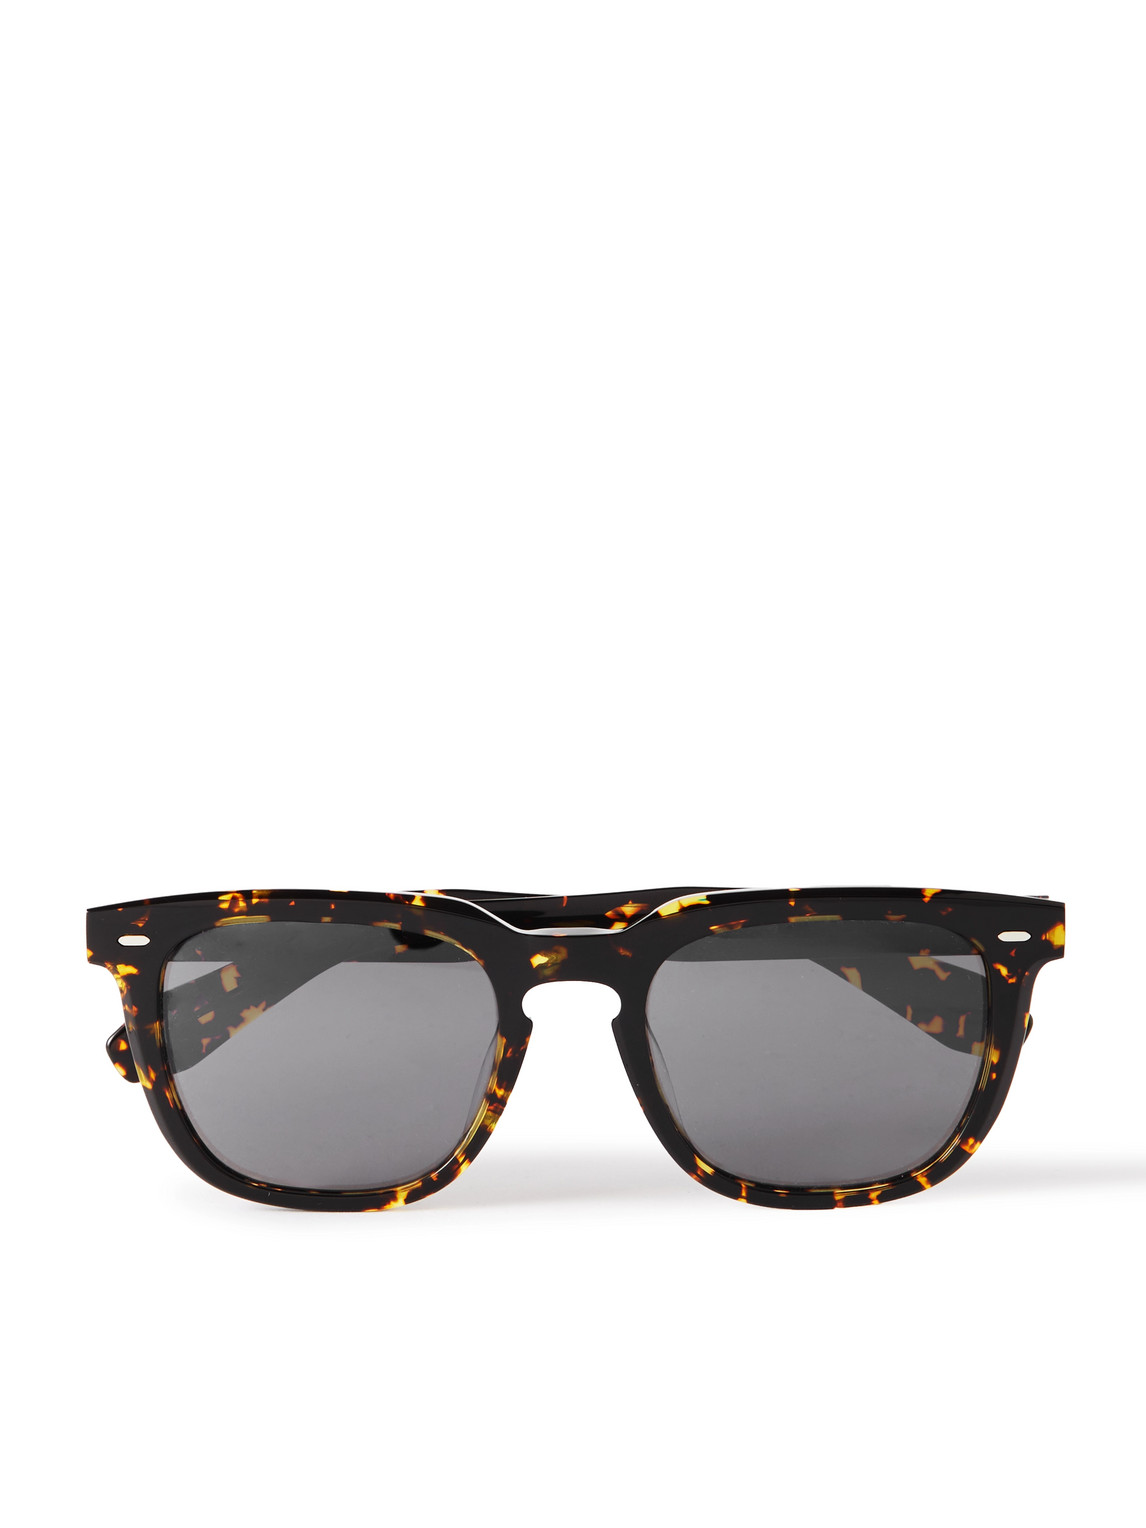 Oliver Peoples D-frame Tortoiseshell Acetate Sunglasses